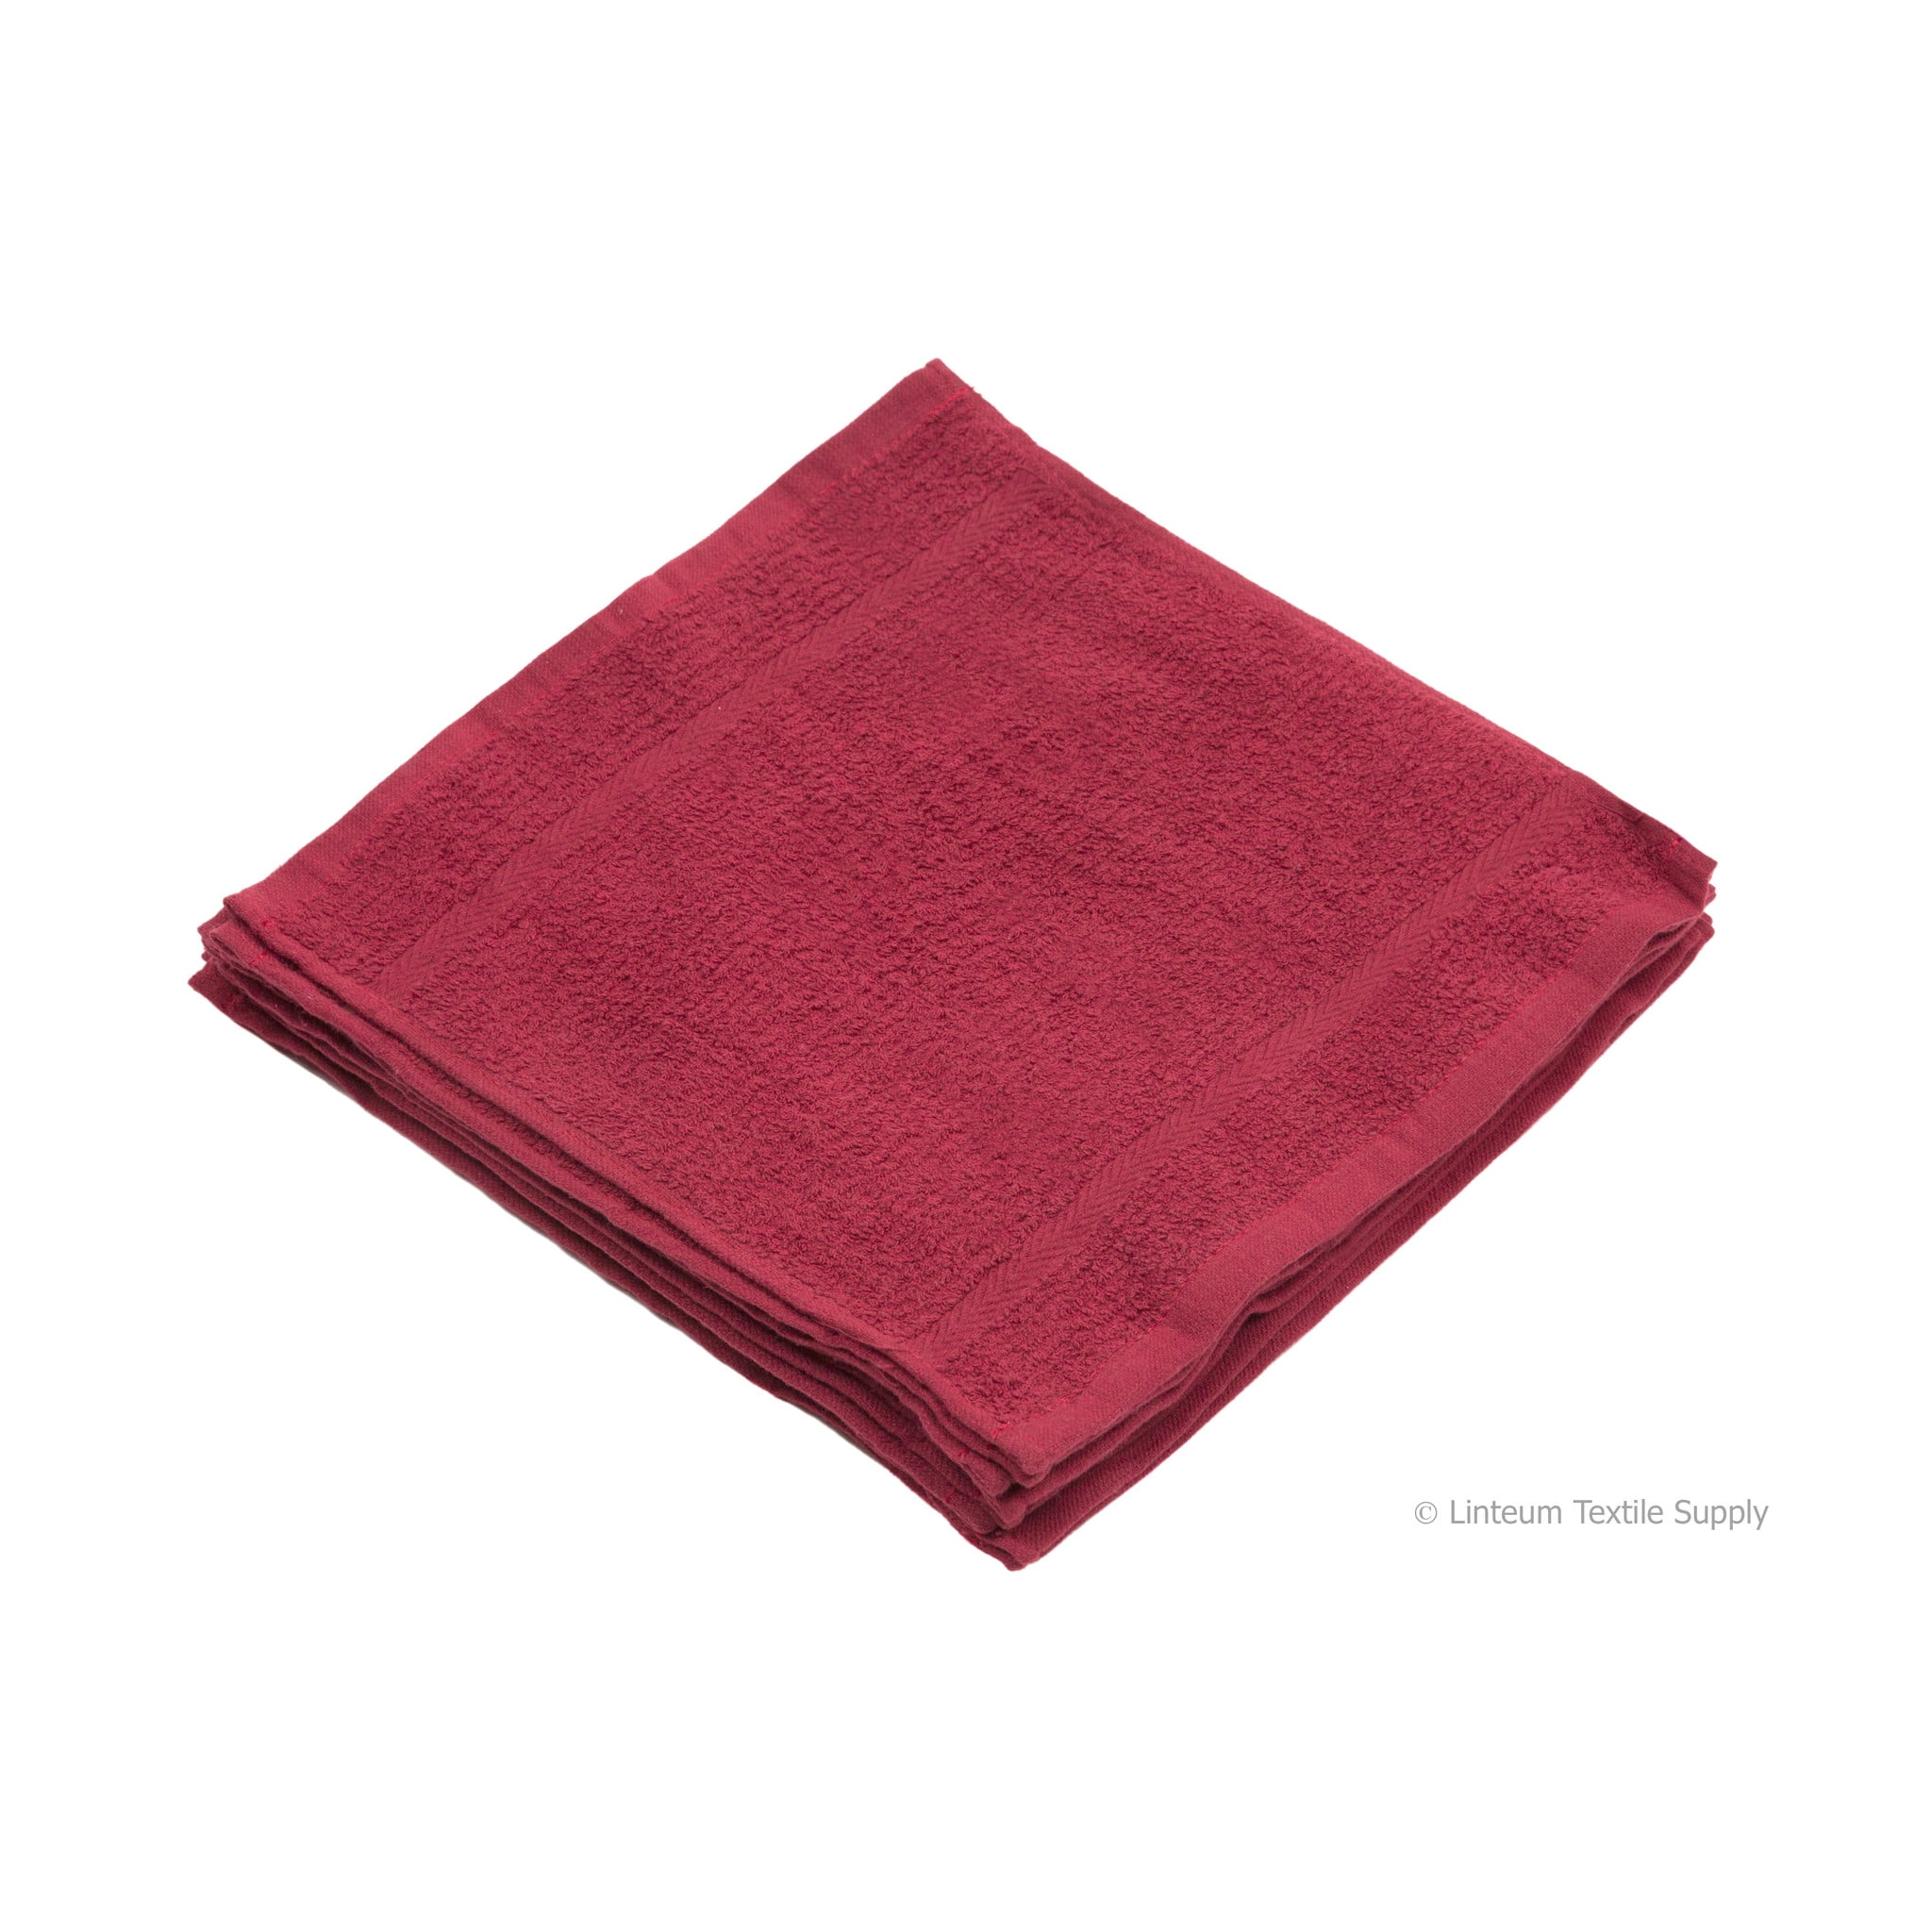 Linteum Textile 100% Soft Cotton 12-Pack, 12x12 in WASHCLOTHS Face Towels